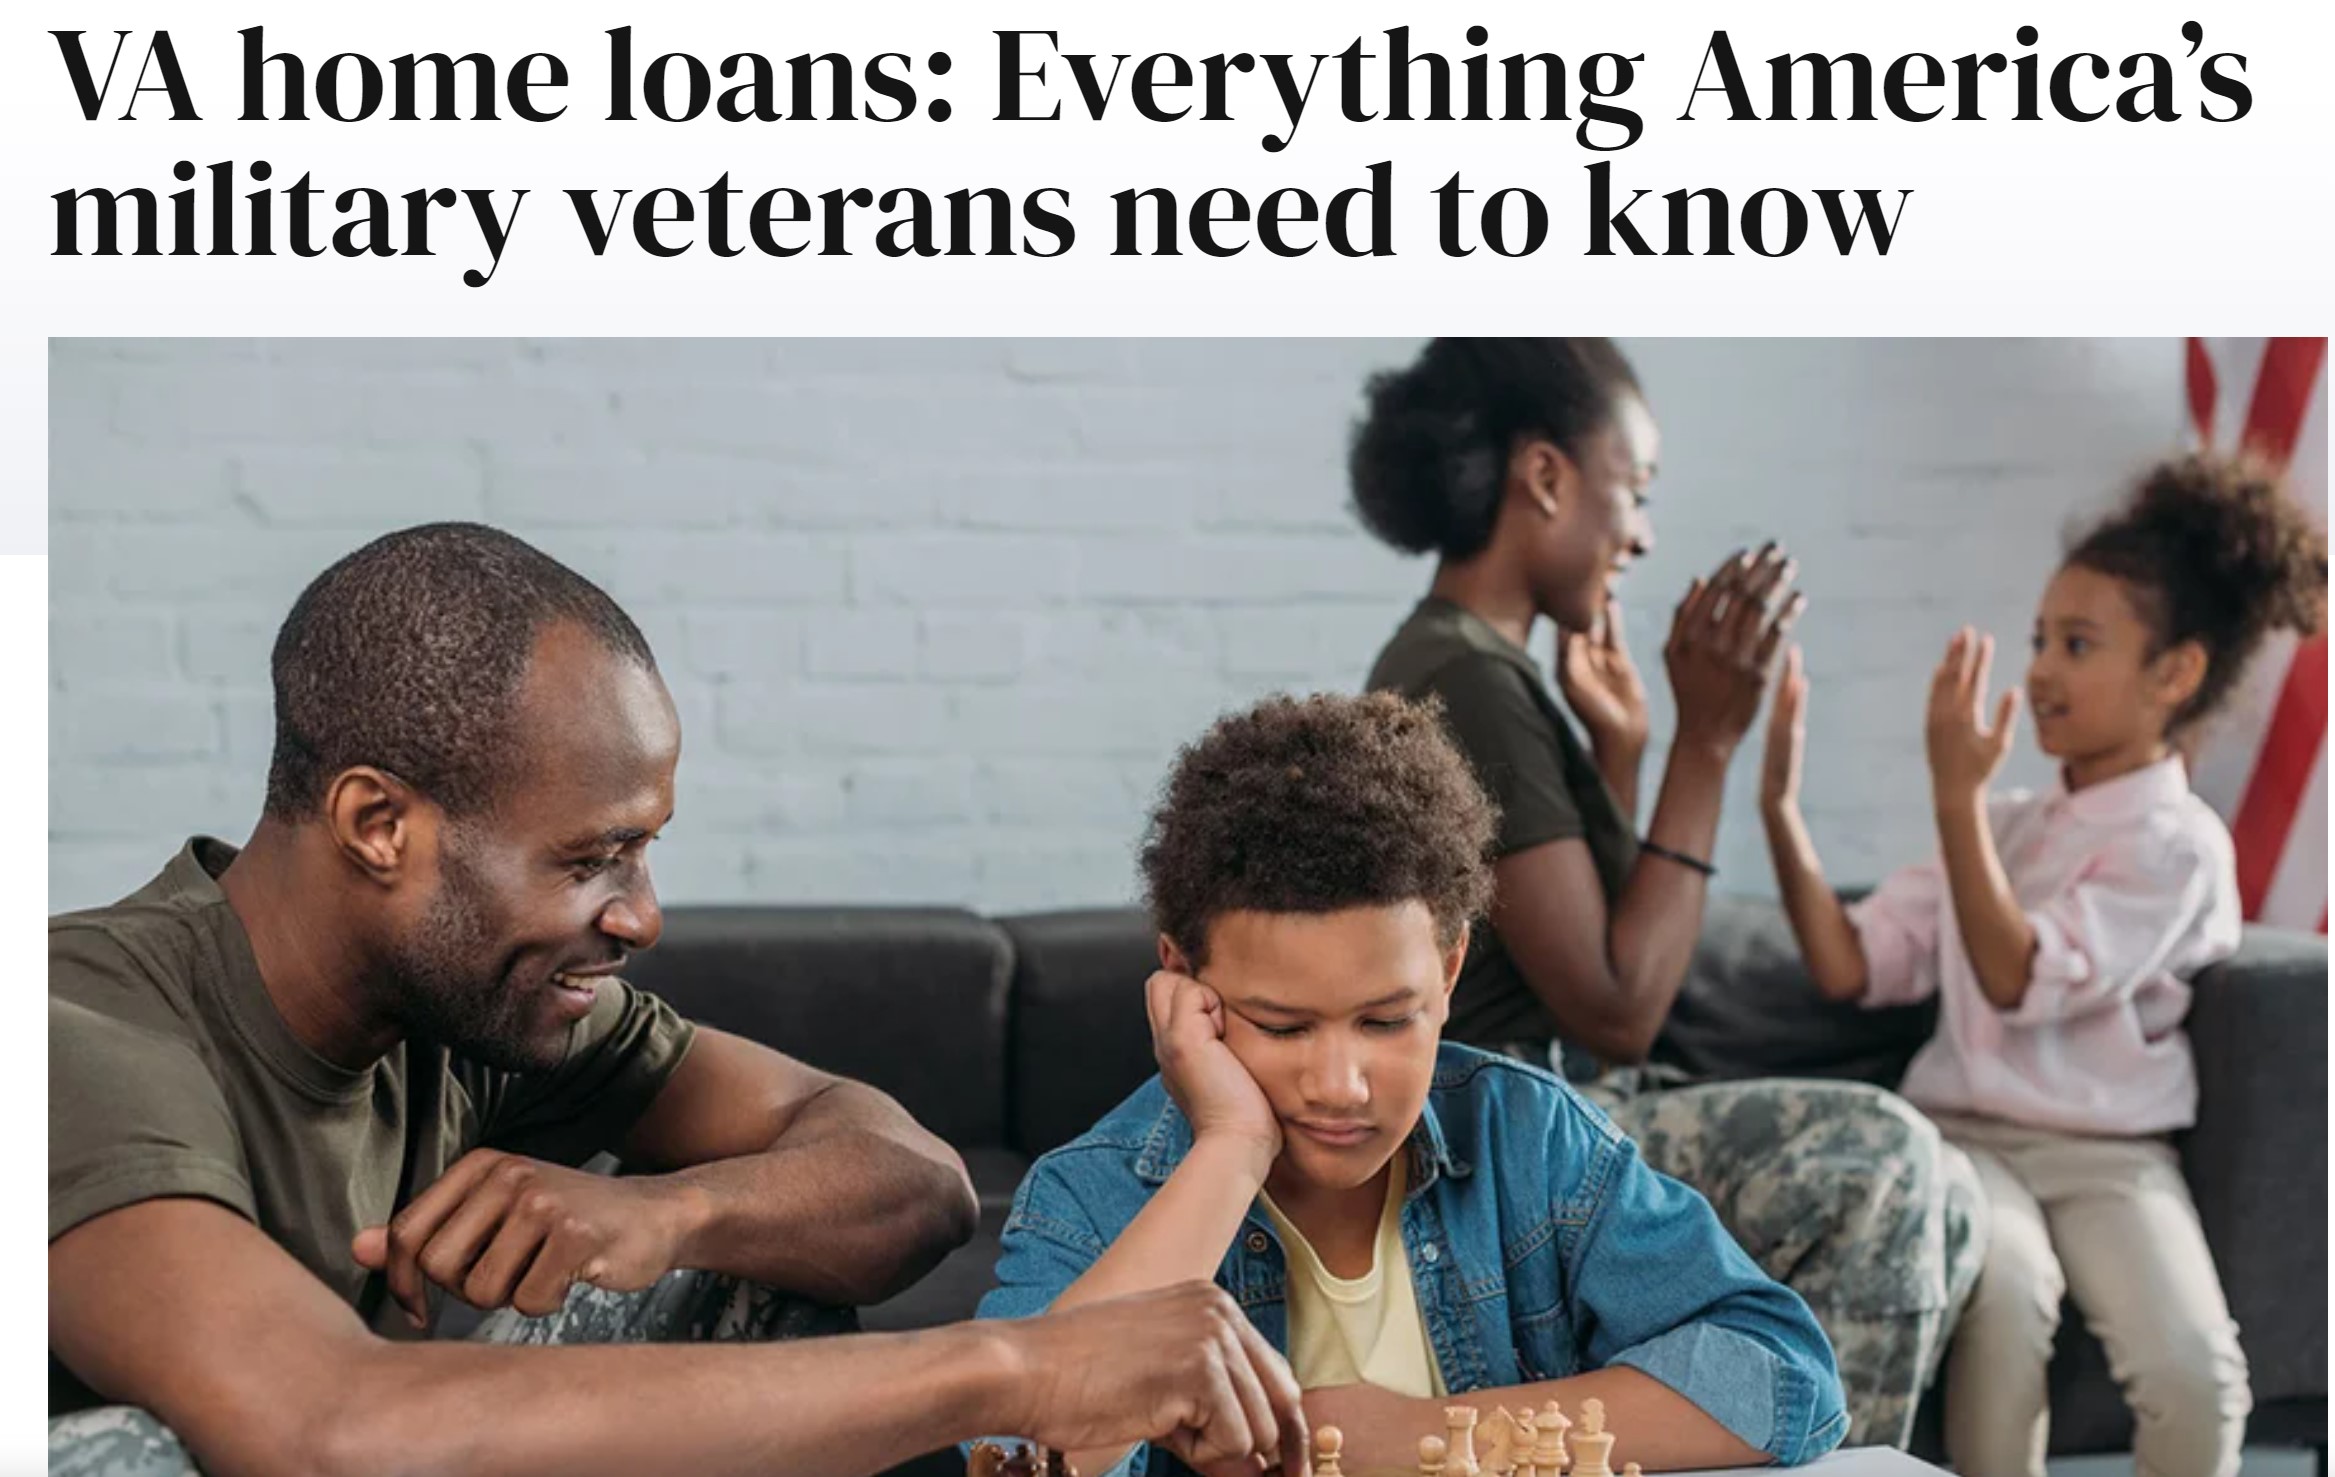 https://www.bankrate.com/mortgages/understanding-va-loans/